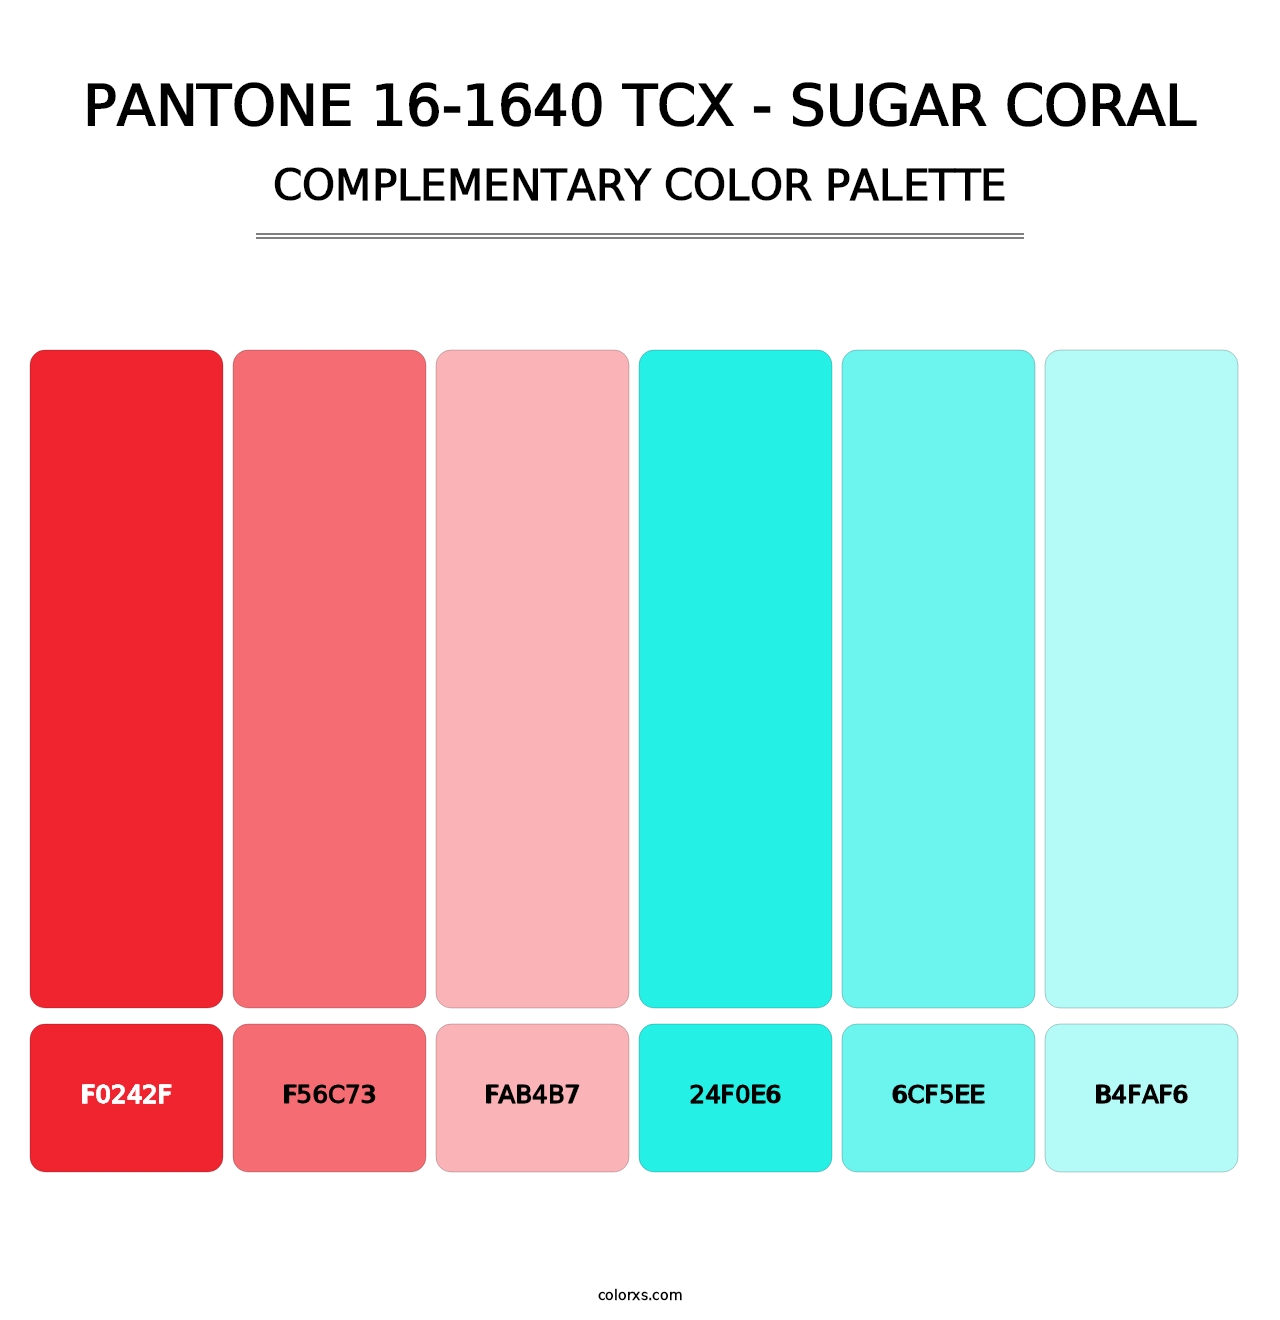 PANTONE 16-1640 TCX - Sugar Coral - Complementary Color Palette